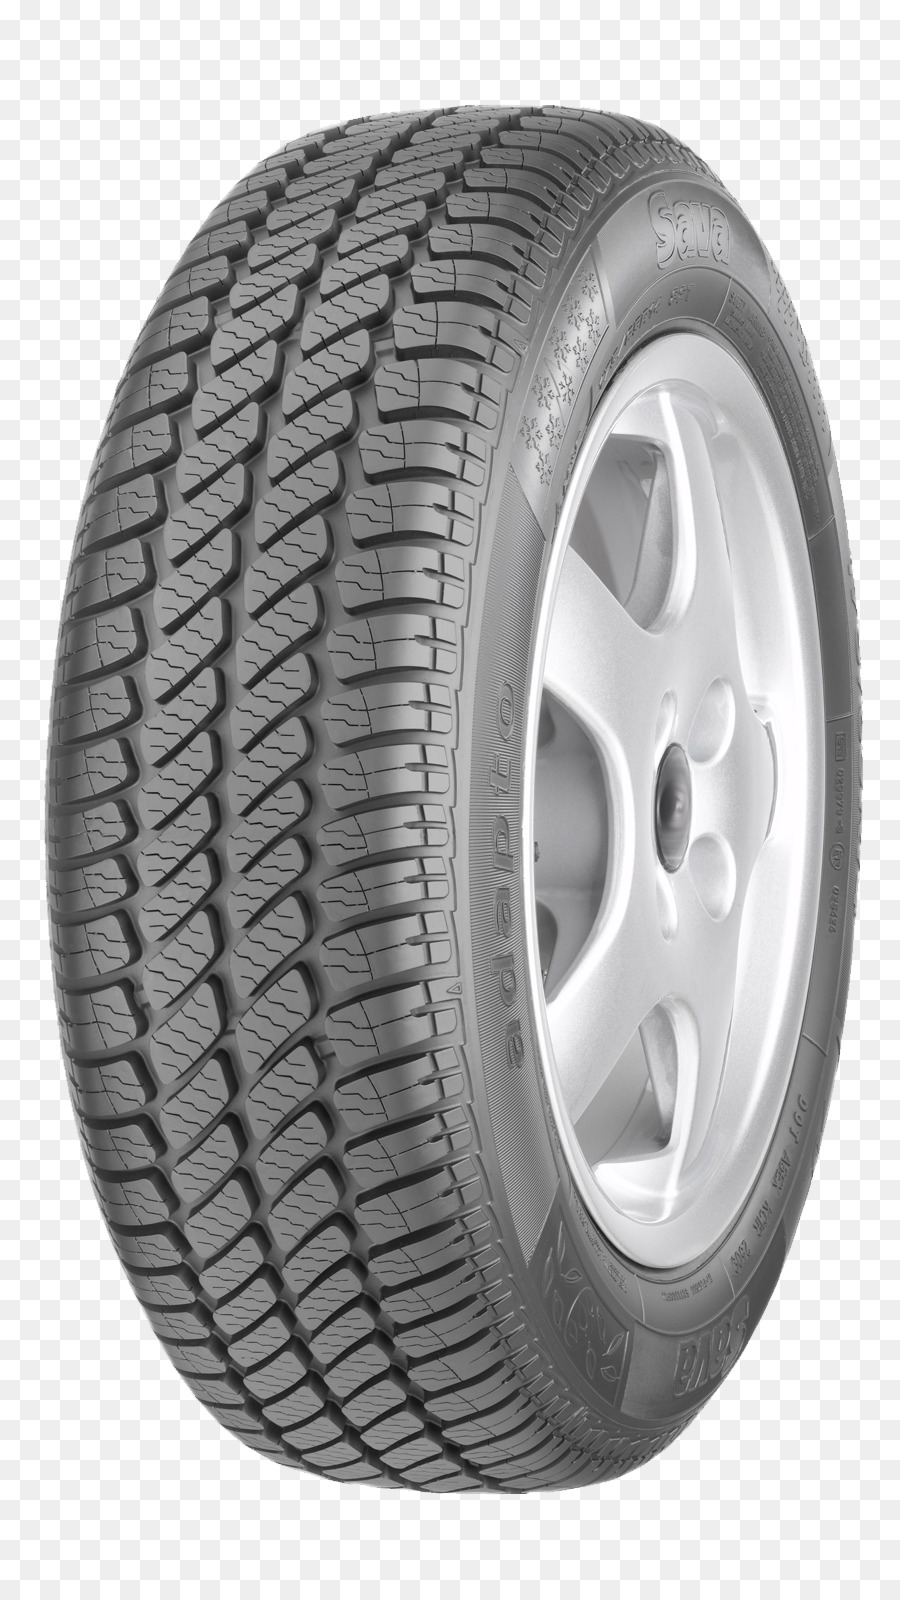 Goodyear Tire und Rubber Company Car Giti Tire Goodyear Dunlop-Sava-Reifen - Auto